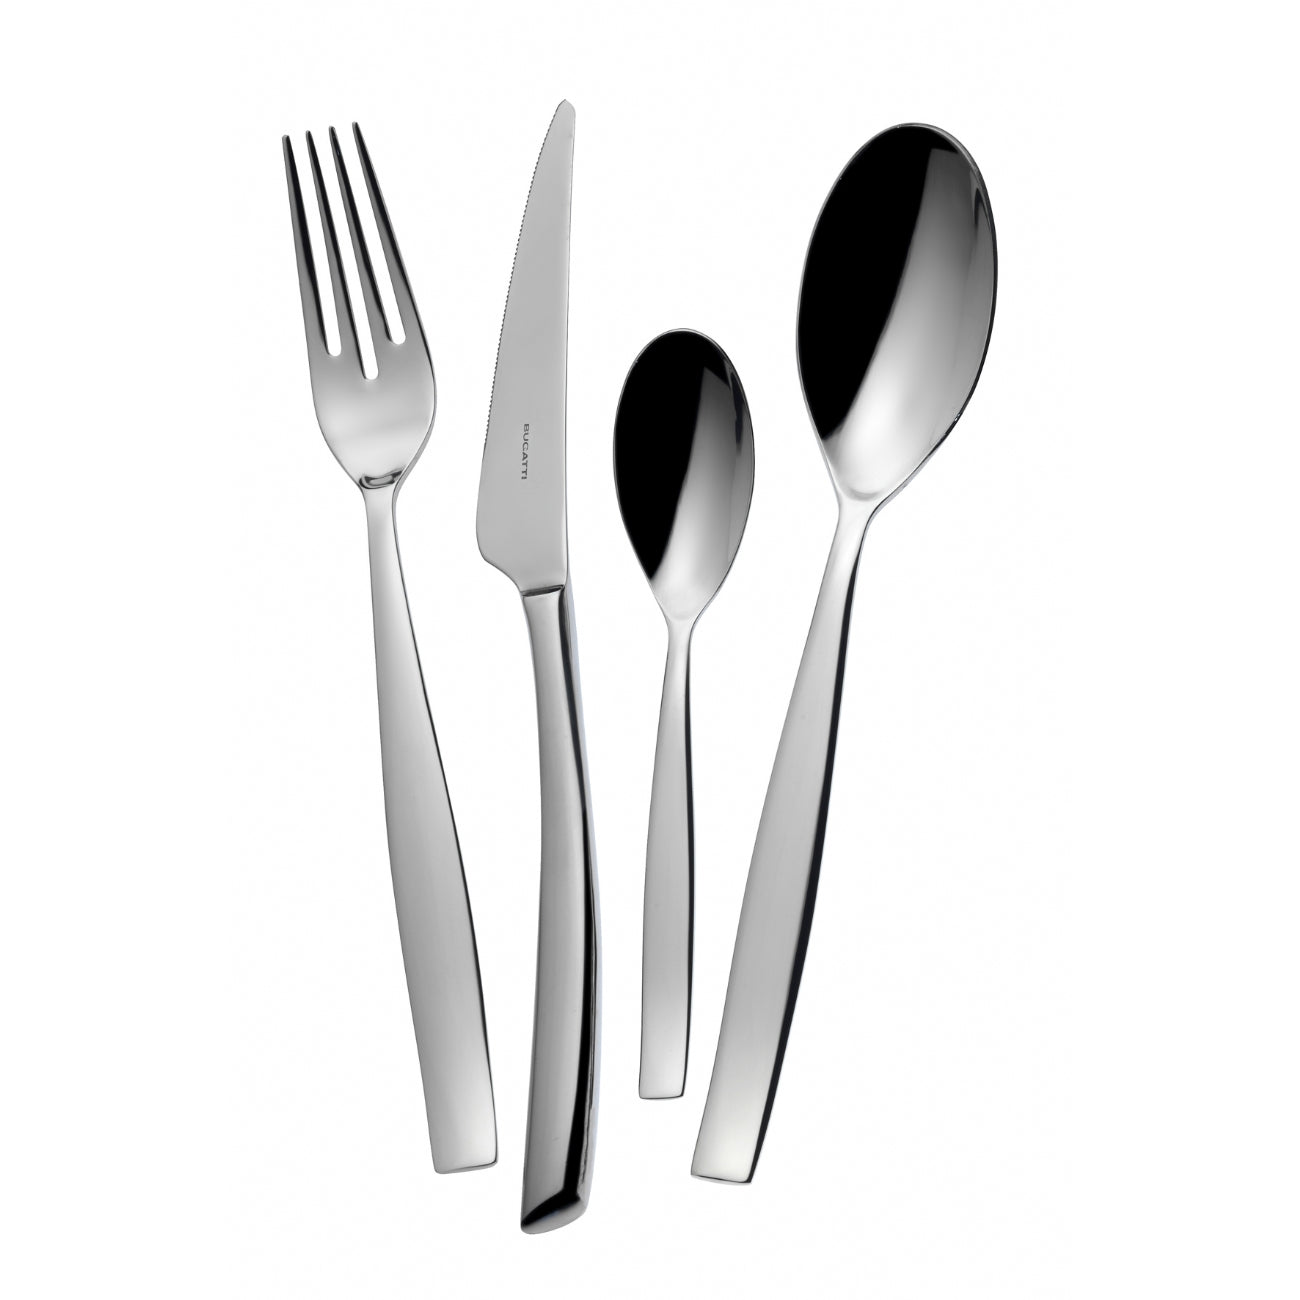 BUGATTI, Toscana, 30-piece cutlery set in 18/10 stainless steel